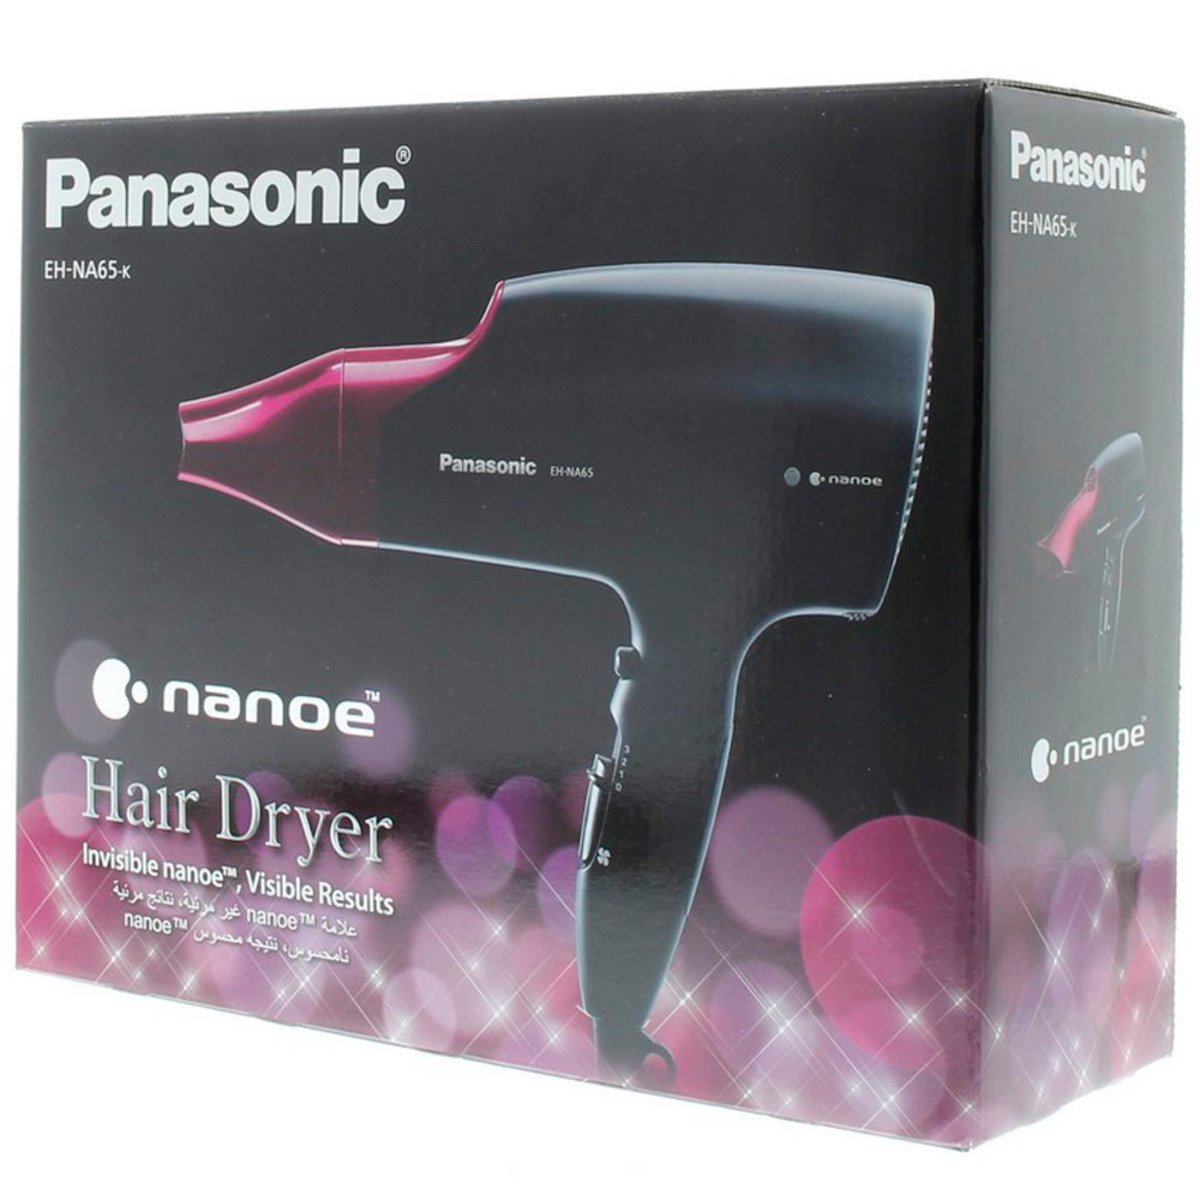 Panasonic Hair Dryer EHNA65